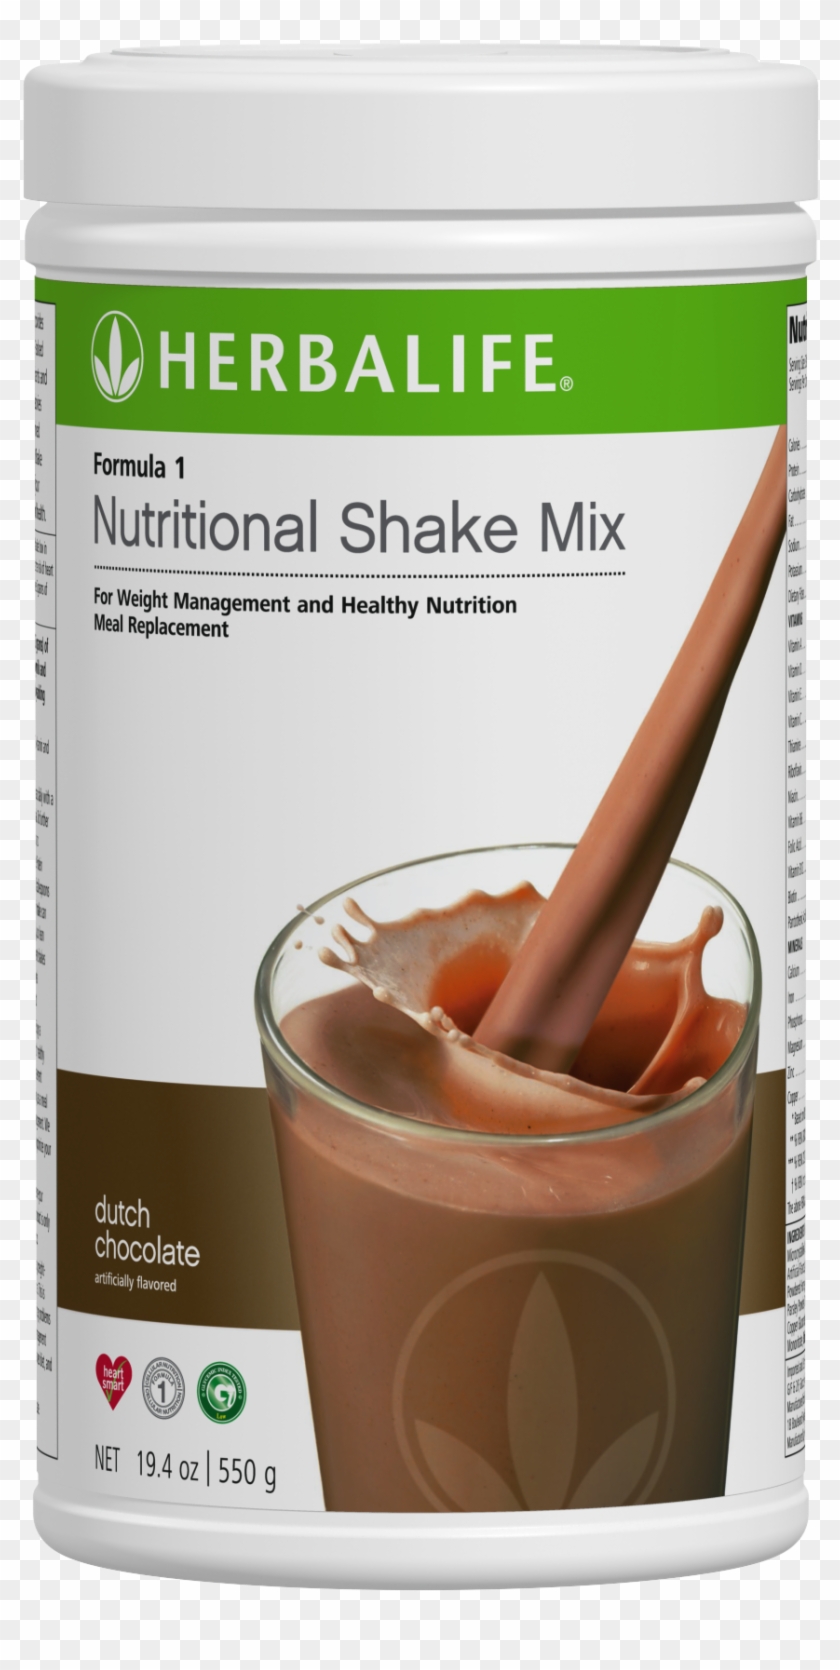 Formula 1 Nutritional Shake Mix - Herbalife Shake Mix Formula 1 Clipart #3593762